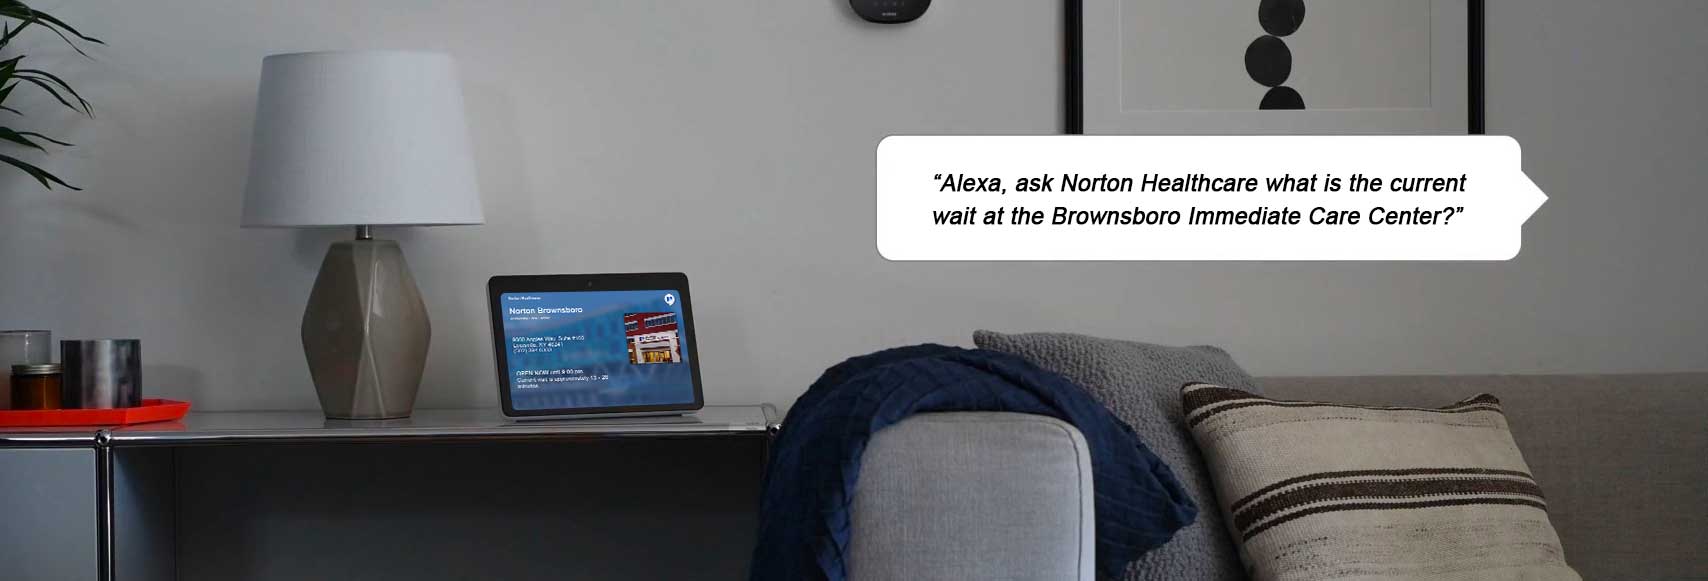 Norton Healthcare Alexa Skill